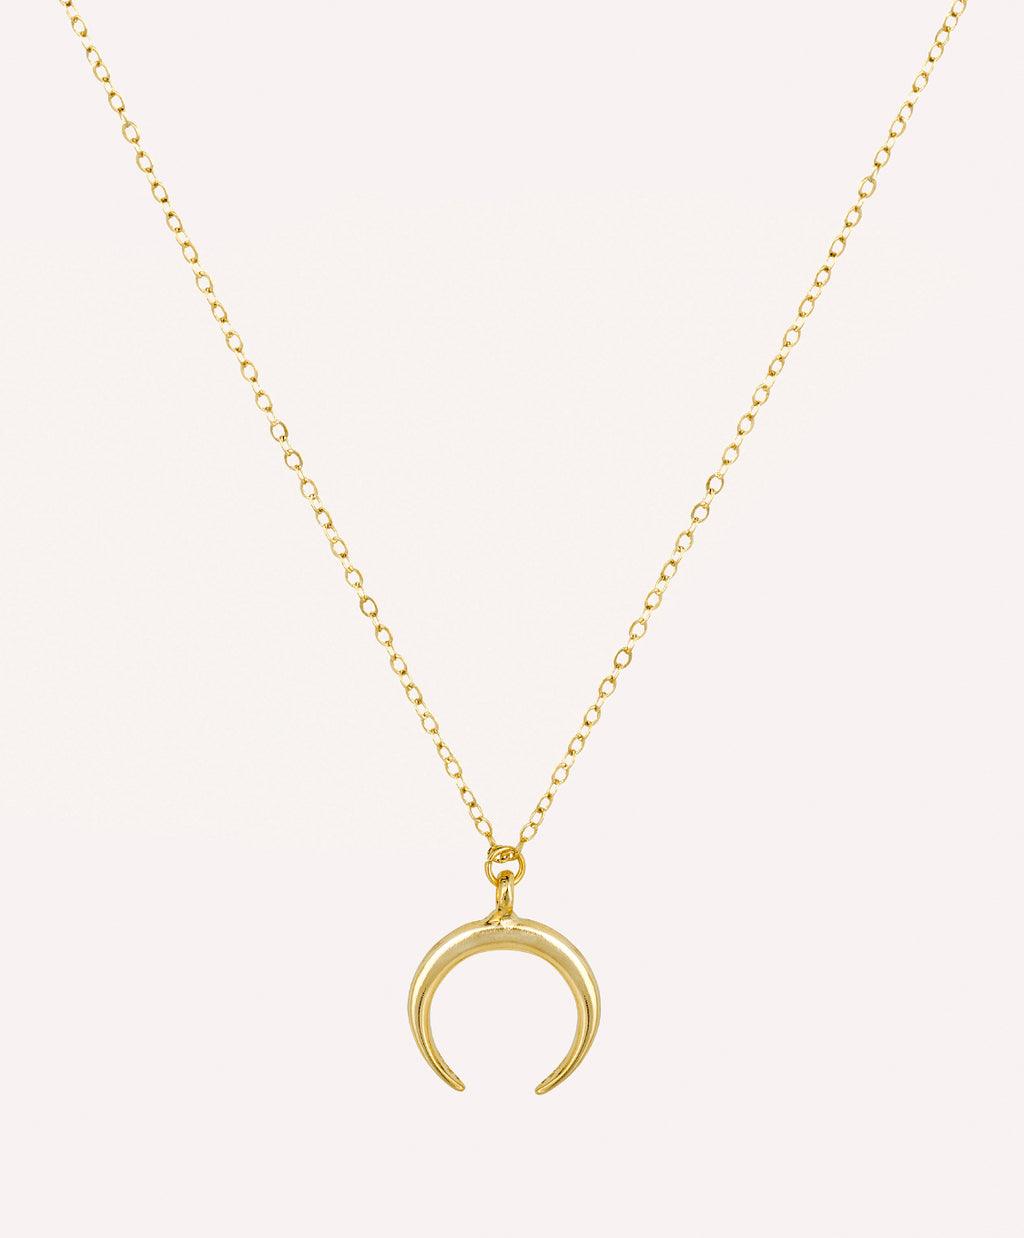 Half moon gold necklace